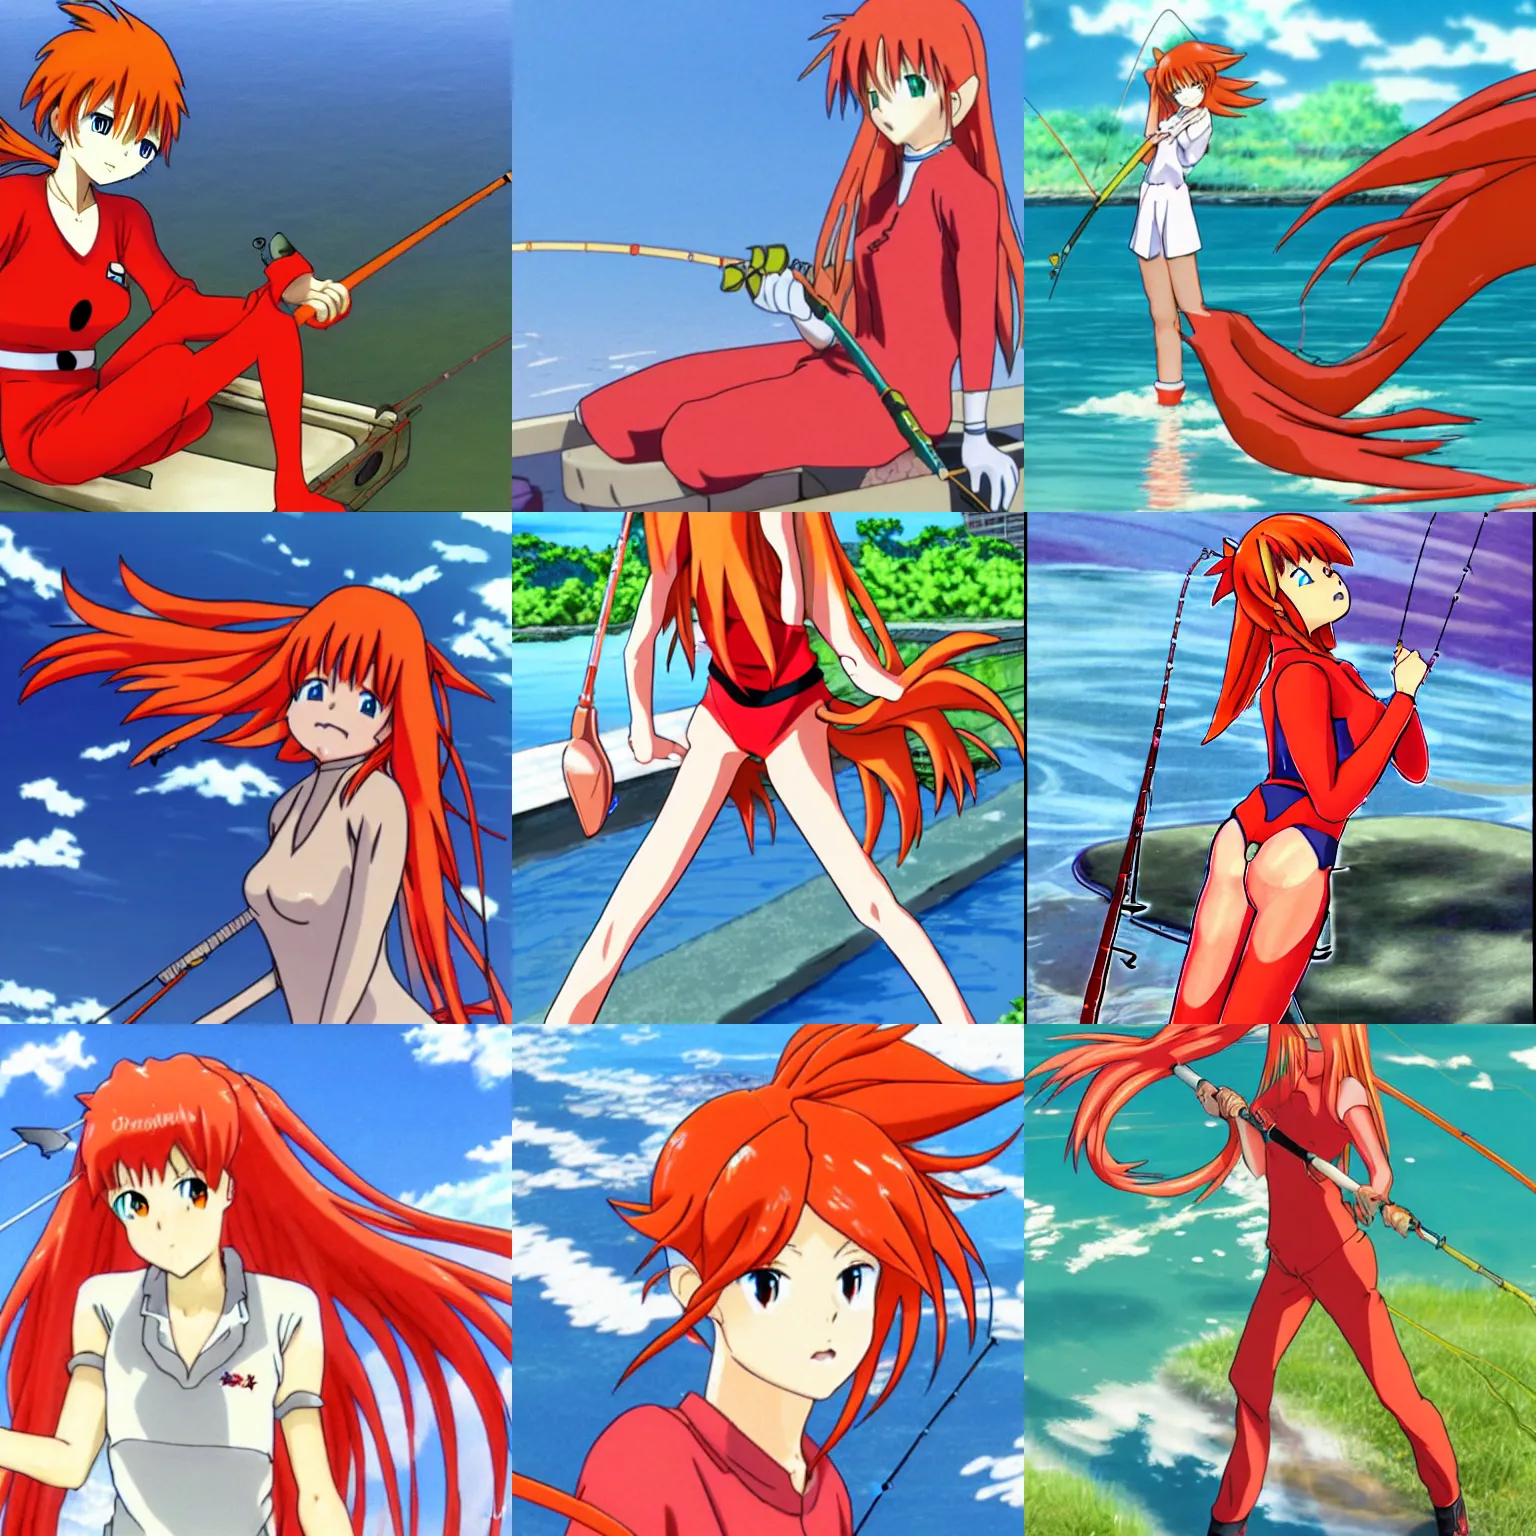 Prompt: asuka langley fishing, anime style